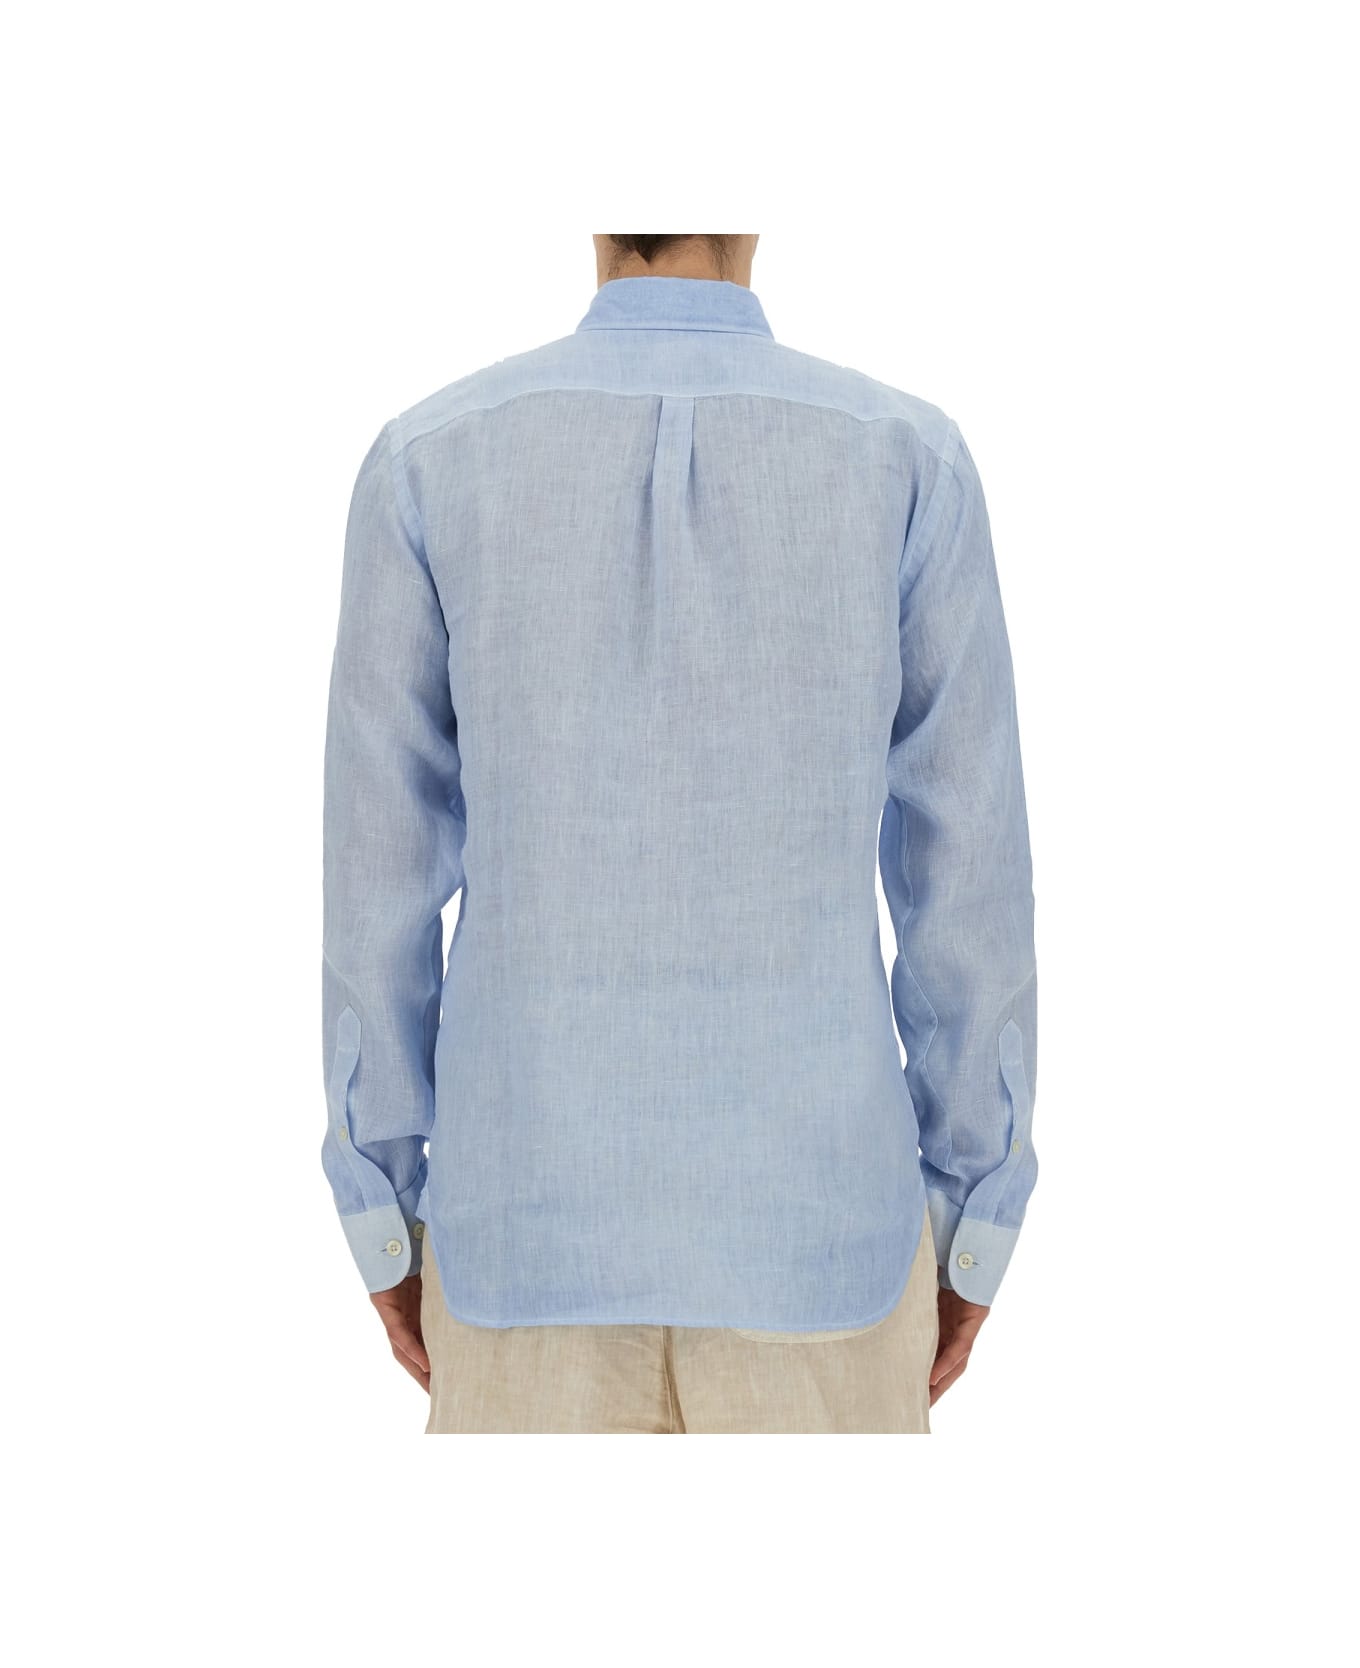 120% Lino Regular Fit Shirt - BABY BLUE シャツ